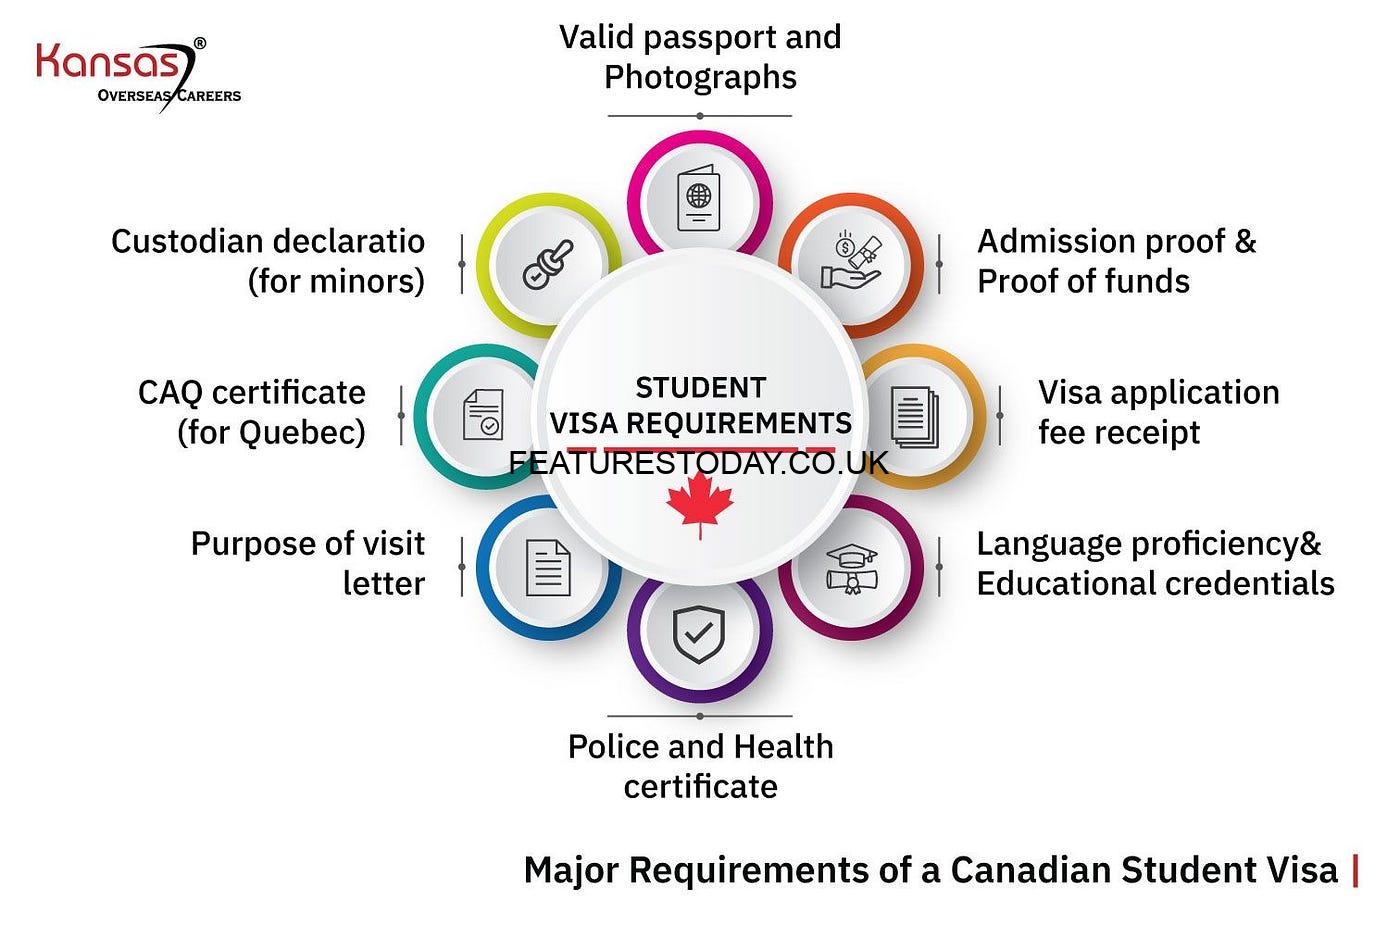 Visa free admissions in Canada